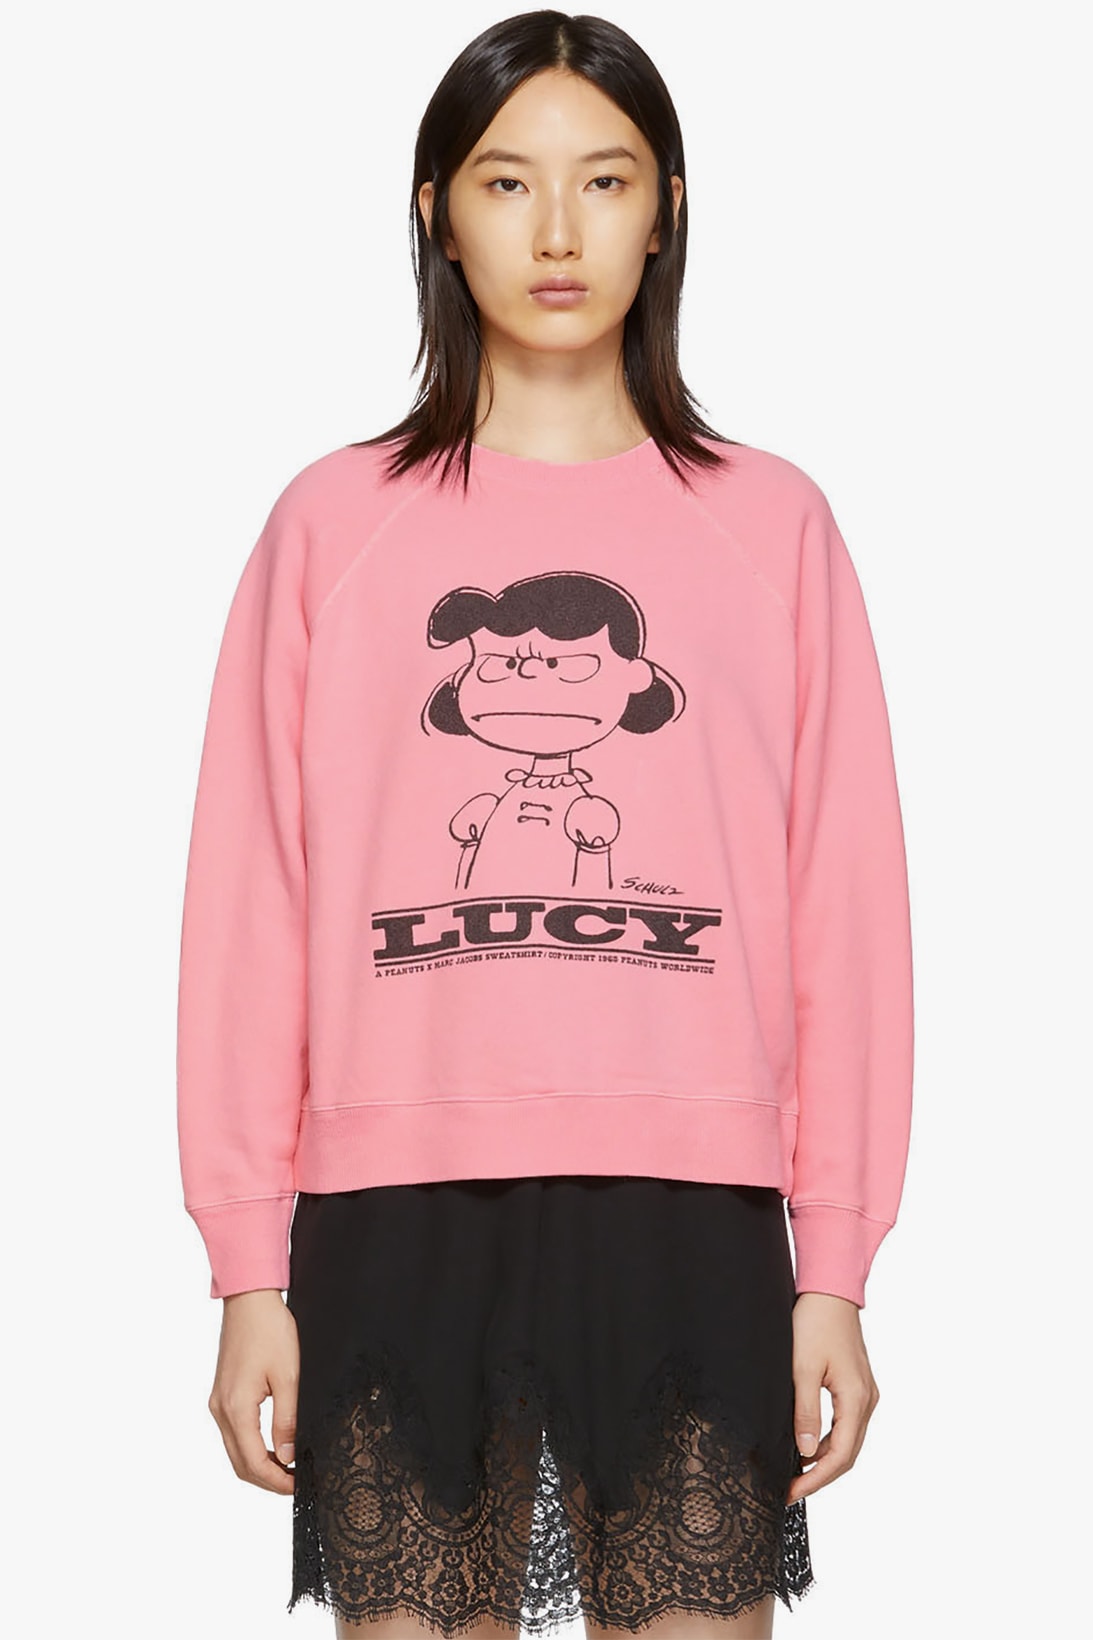 marc jacobs peanuts edition sweatshirts sweatpants lounge pants apparel off white blue pink orange snoopy linus lucy